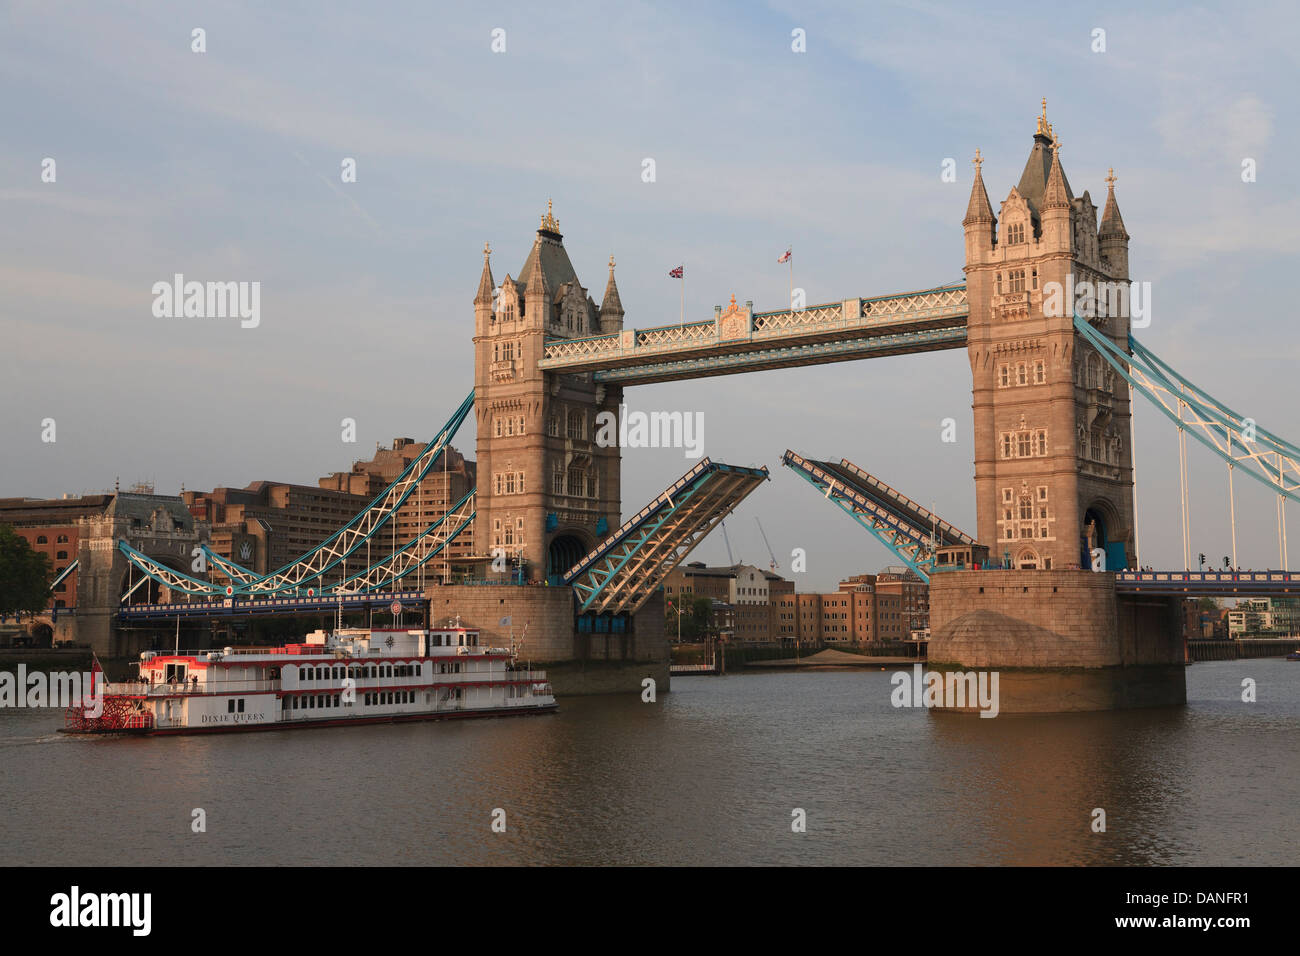 Dixie Queen, Tower Bridge, River Thames, London, UK Stock Photo